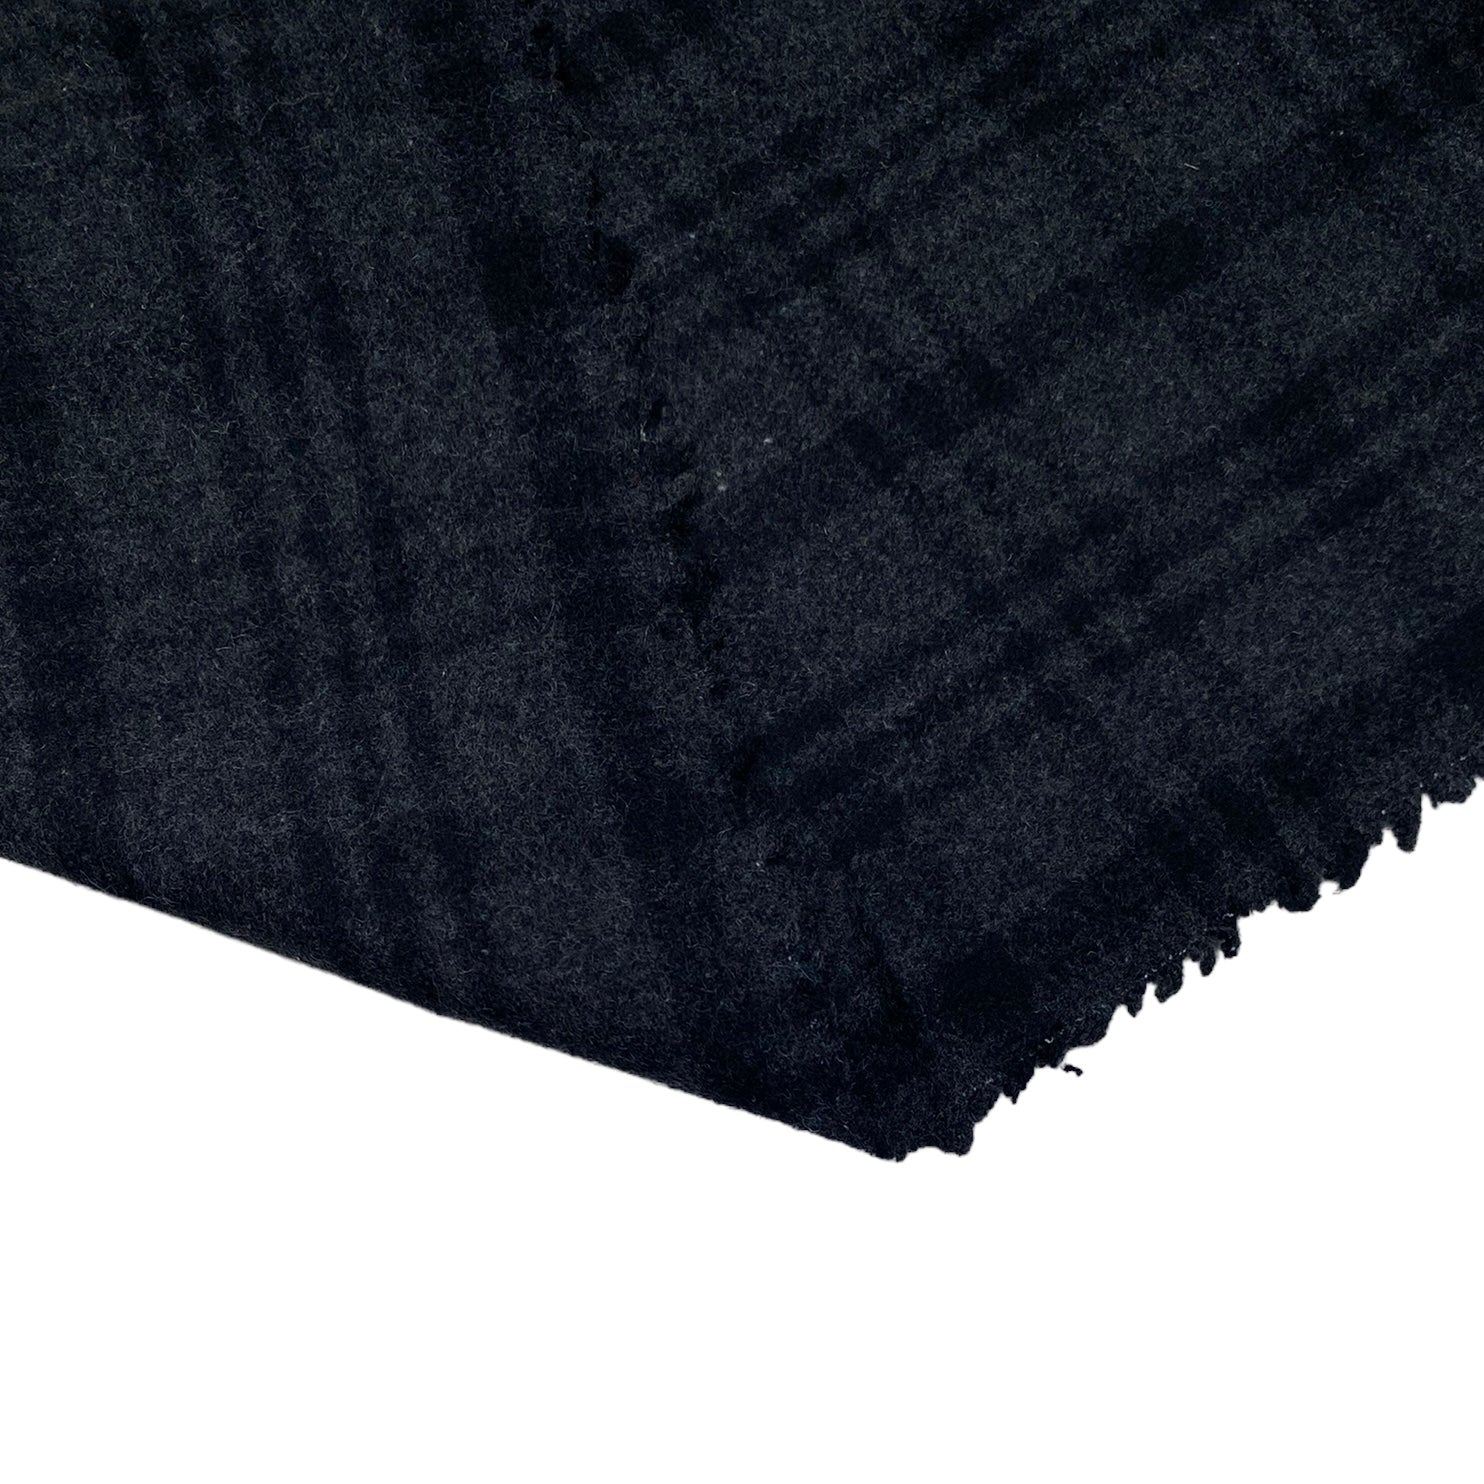 Plaid Melton Wool - Remnant - Grey / Black